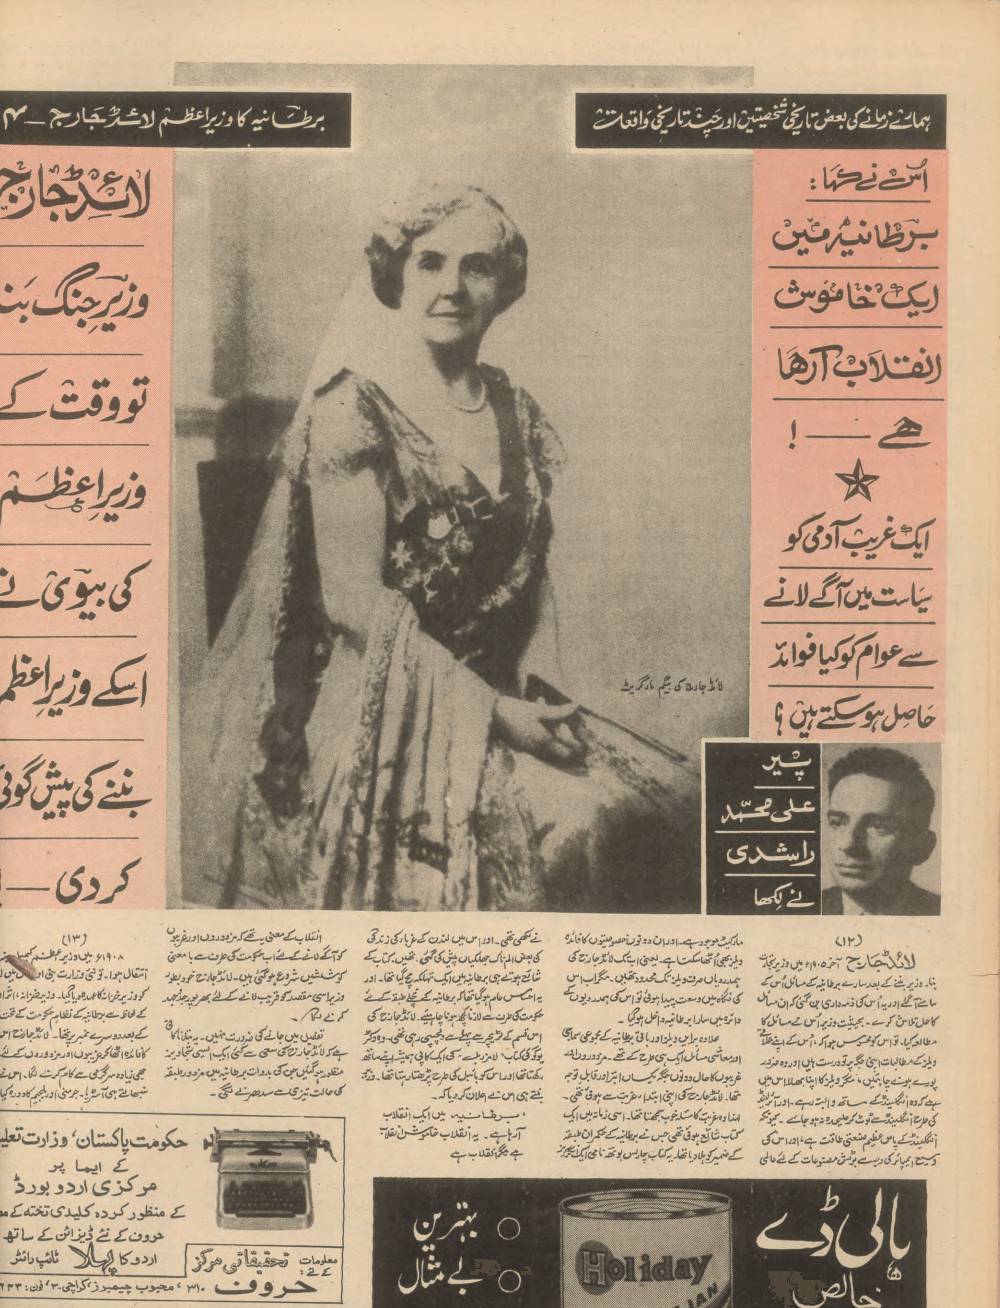 Akhbar-e-Jahan (Dec 18, 1968) - KHAJISTAN™